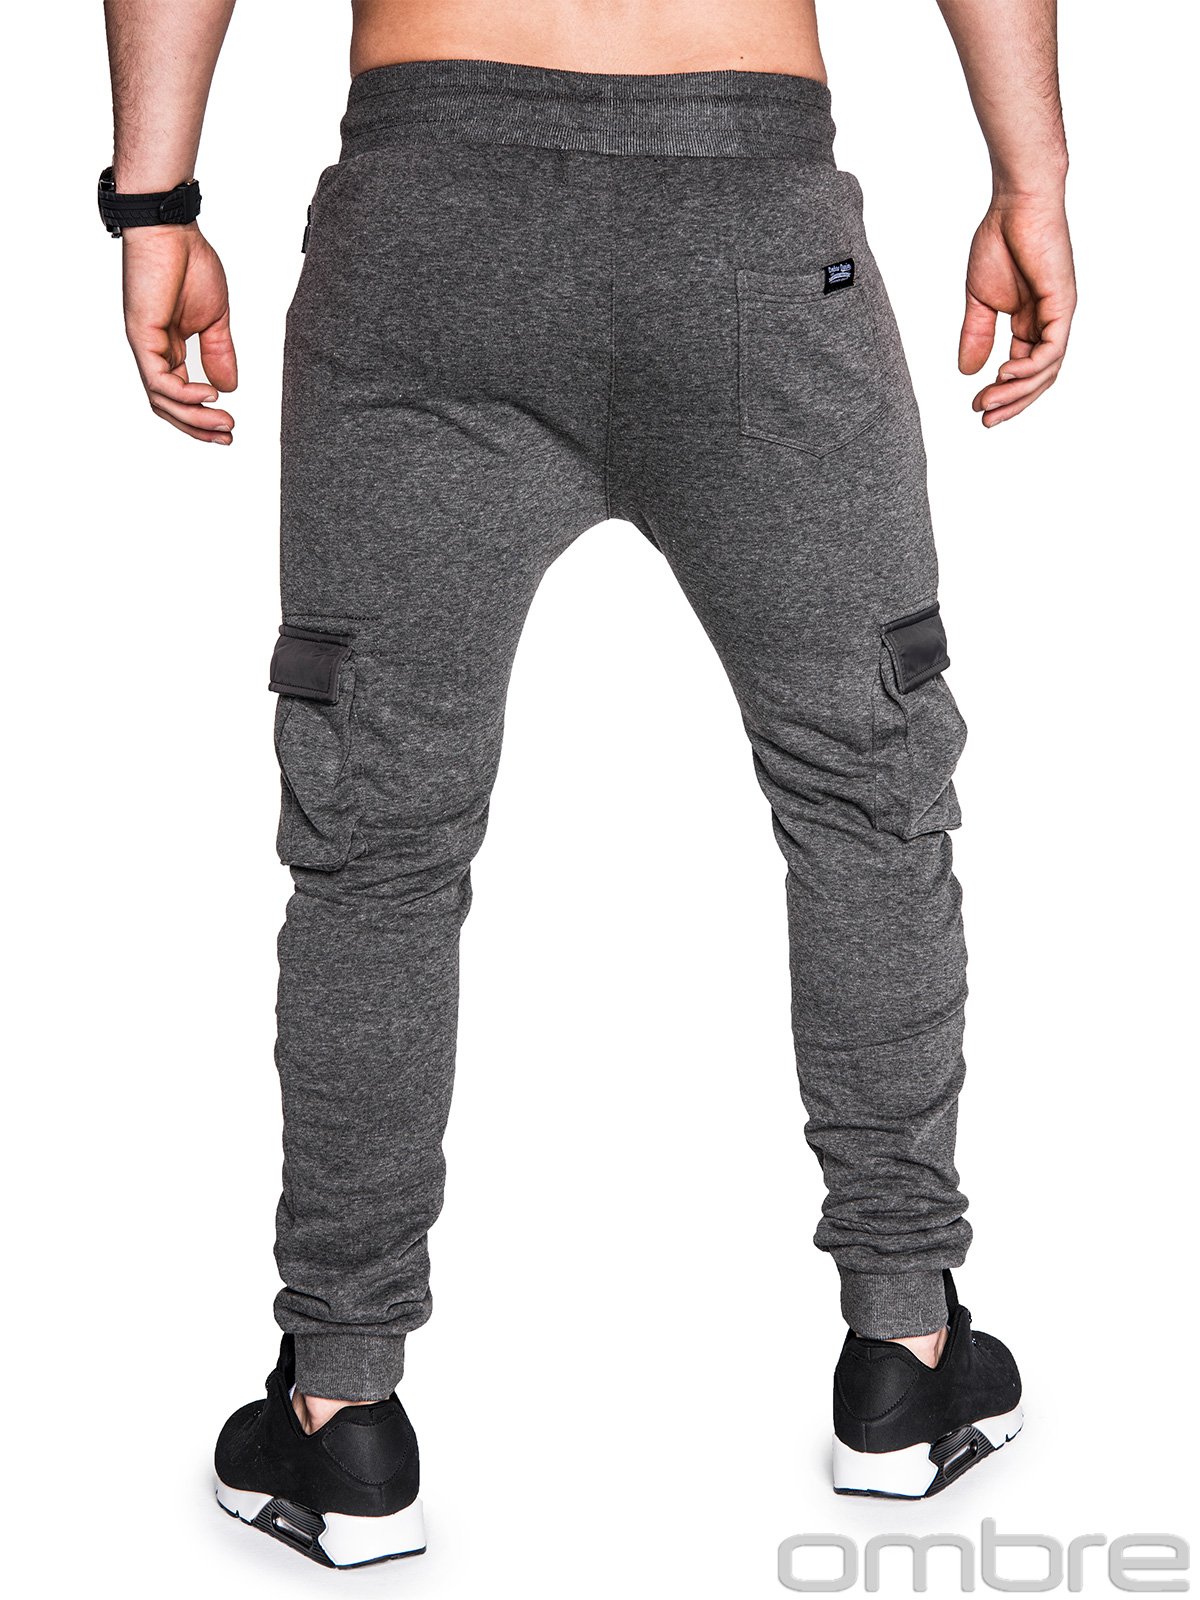 Men's sweatpants P429 - dark grey | MODONE wholesale - Clothing For Men